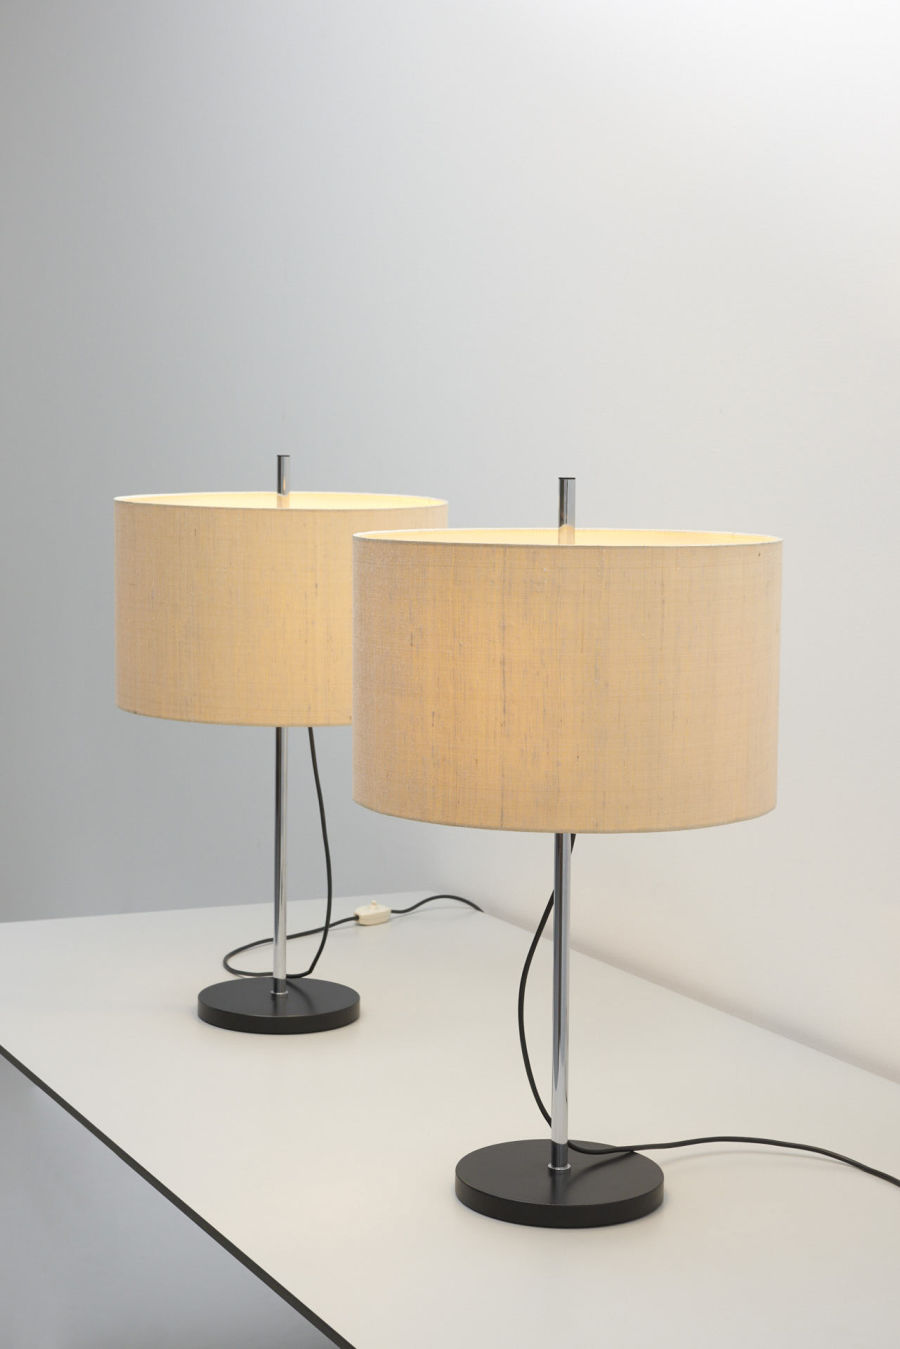 modestfurniture-vintage-2005-staff-table-lamp02